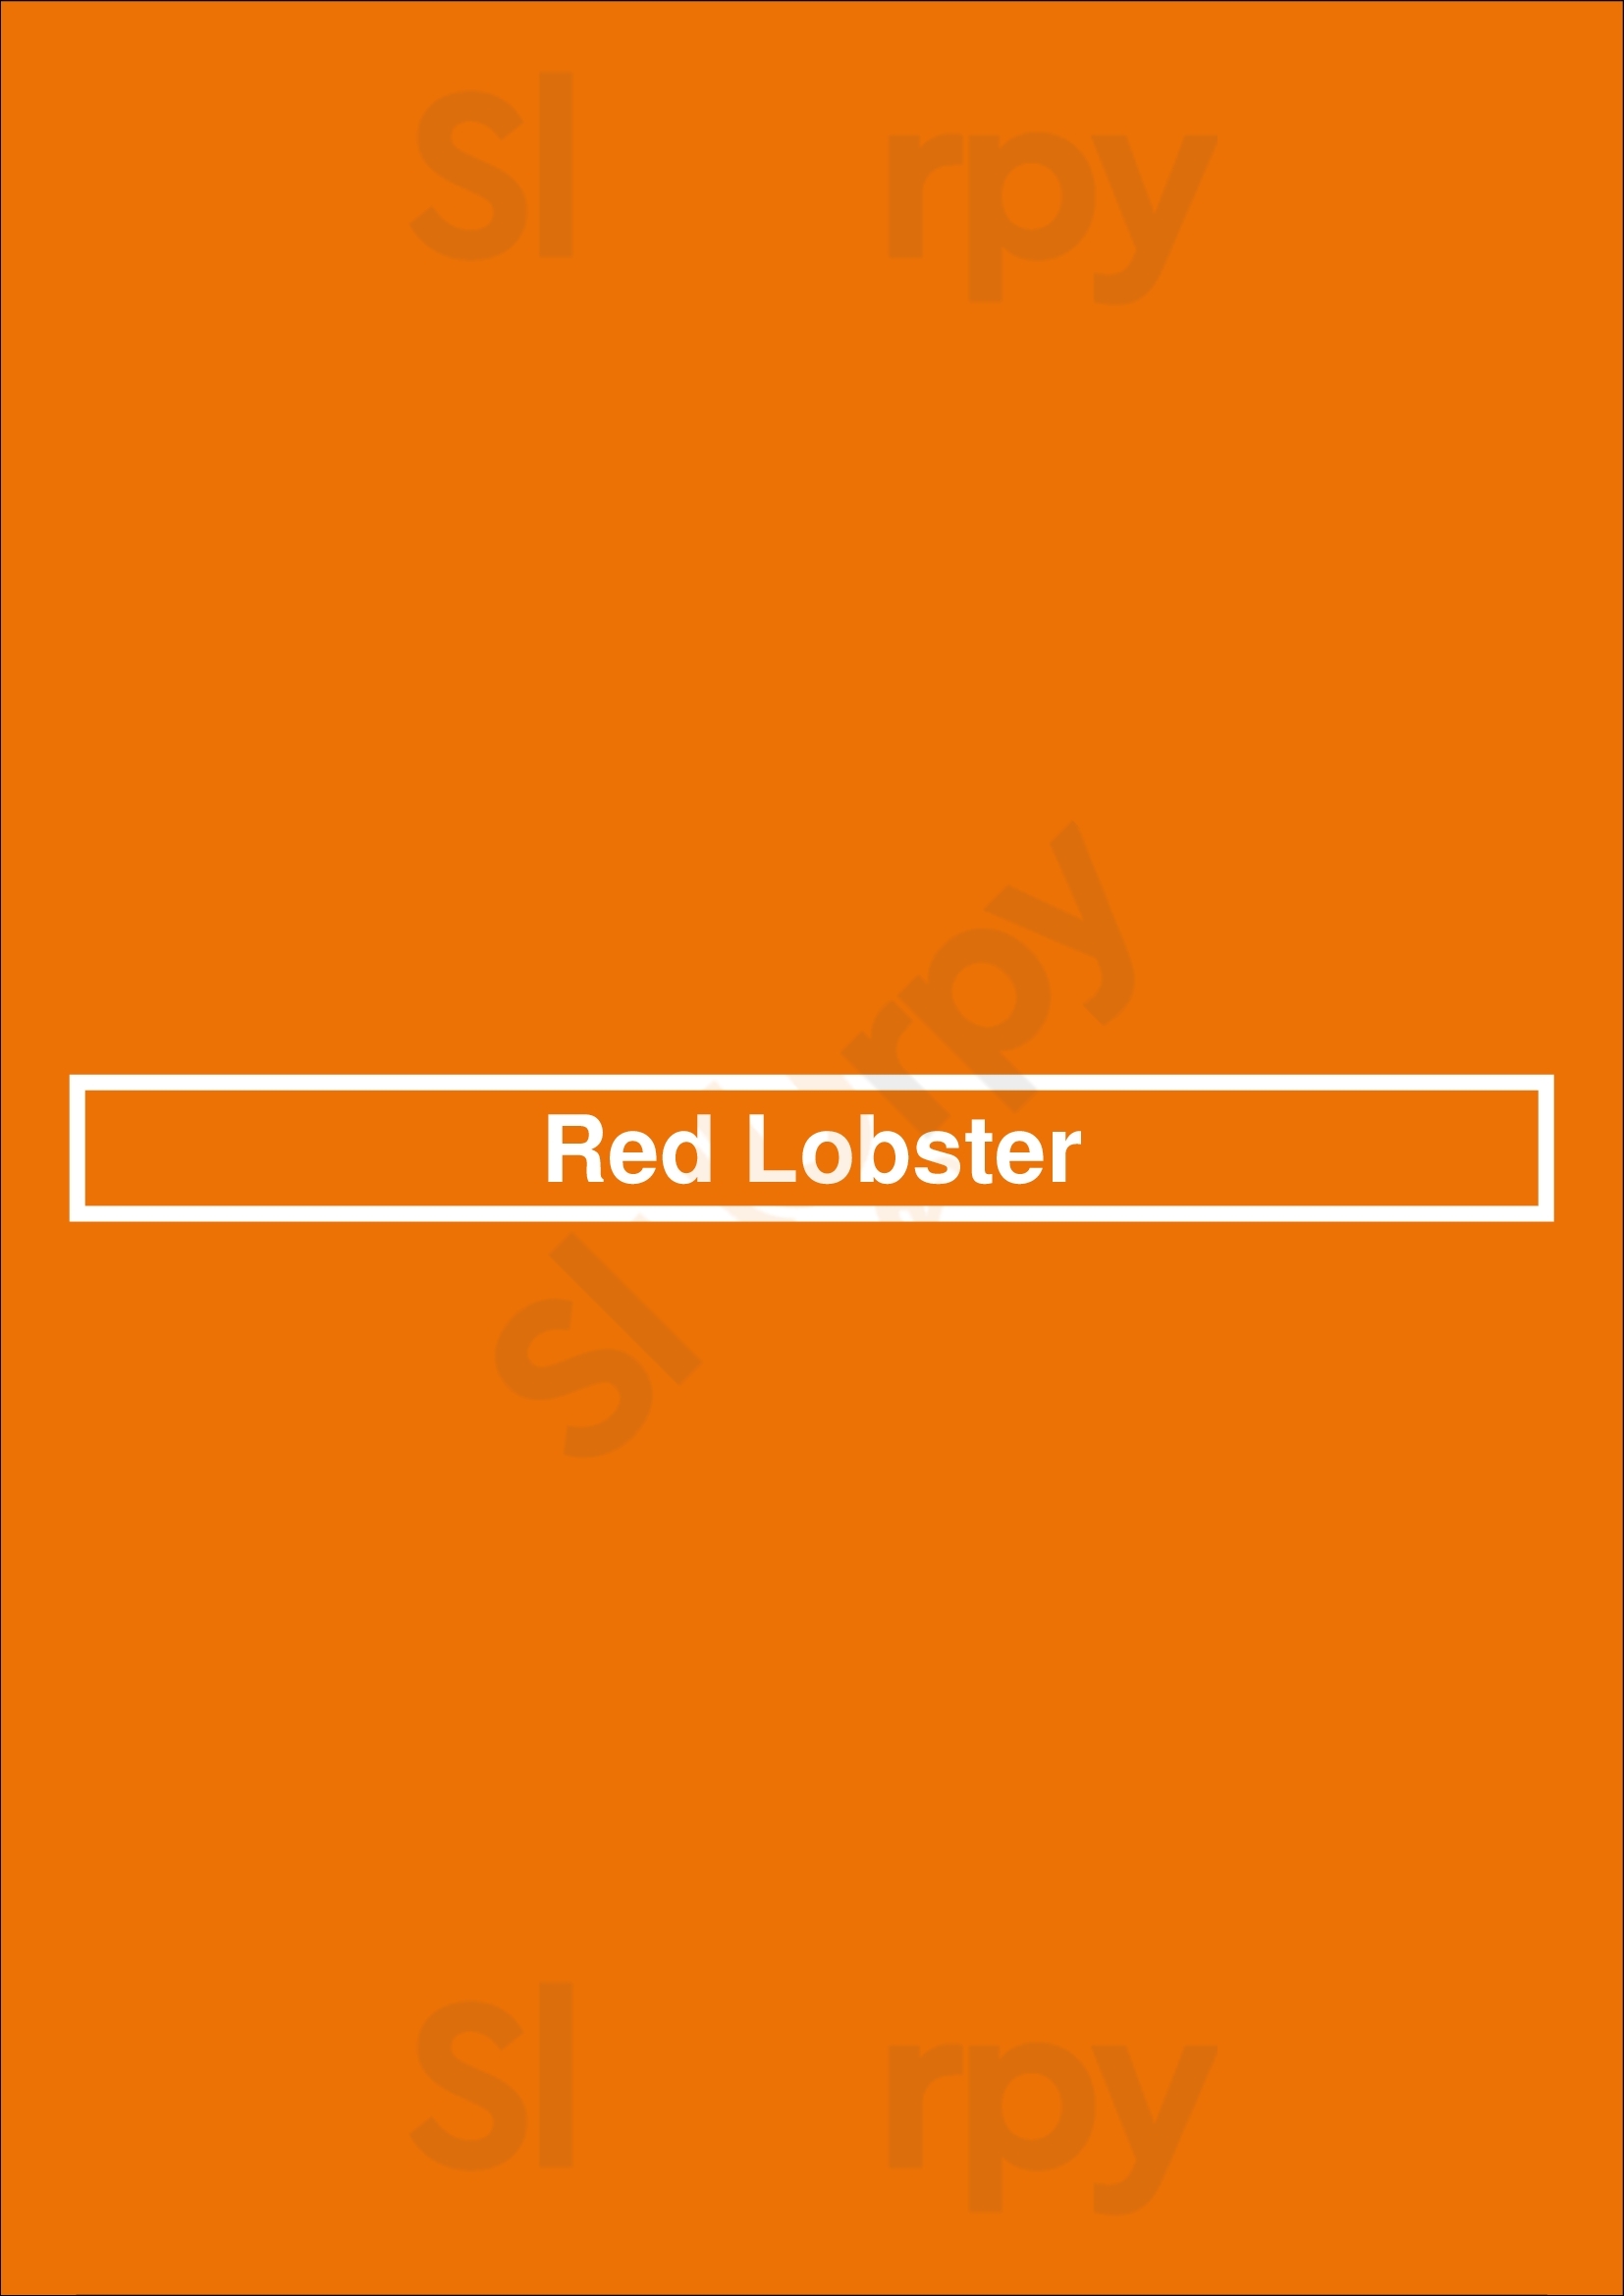 Red Lobster Sacramento Menu - 1